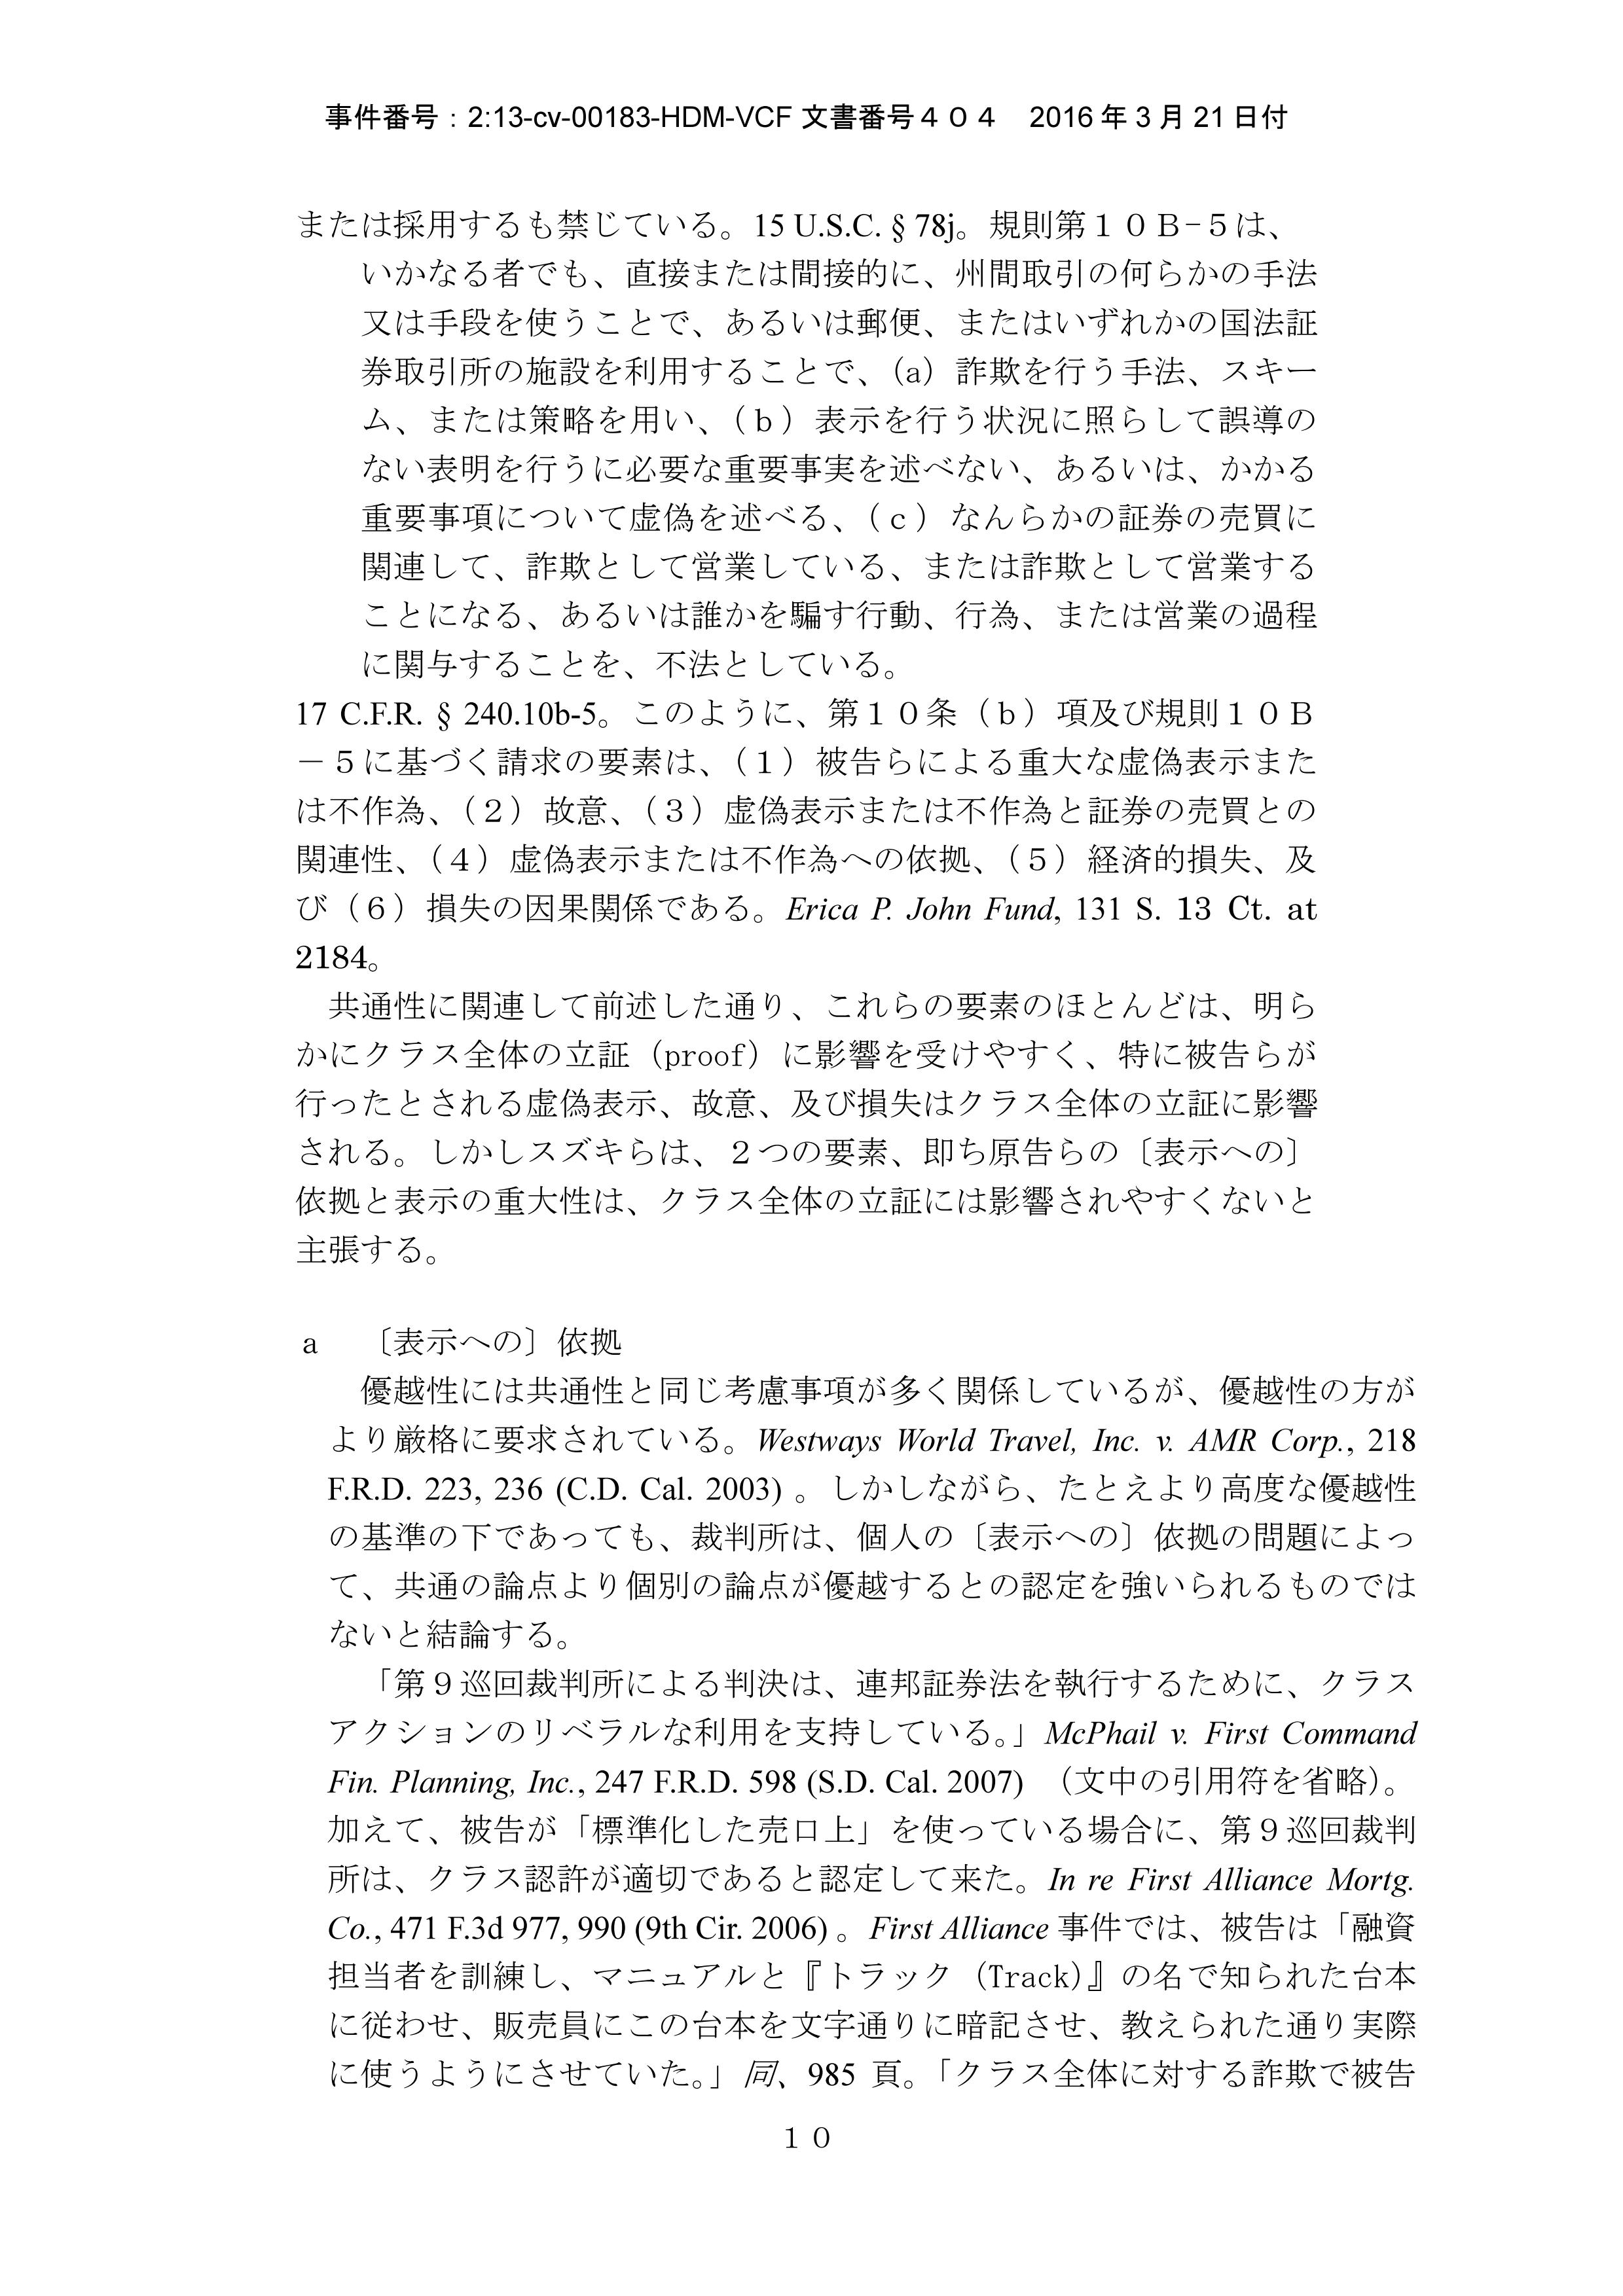 CA_Dkt 404_Order Granting Class Certification_Japanese translation_10